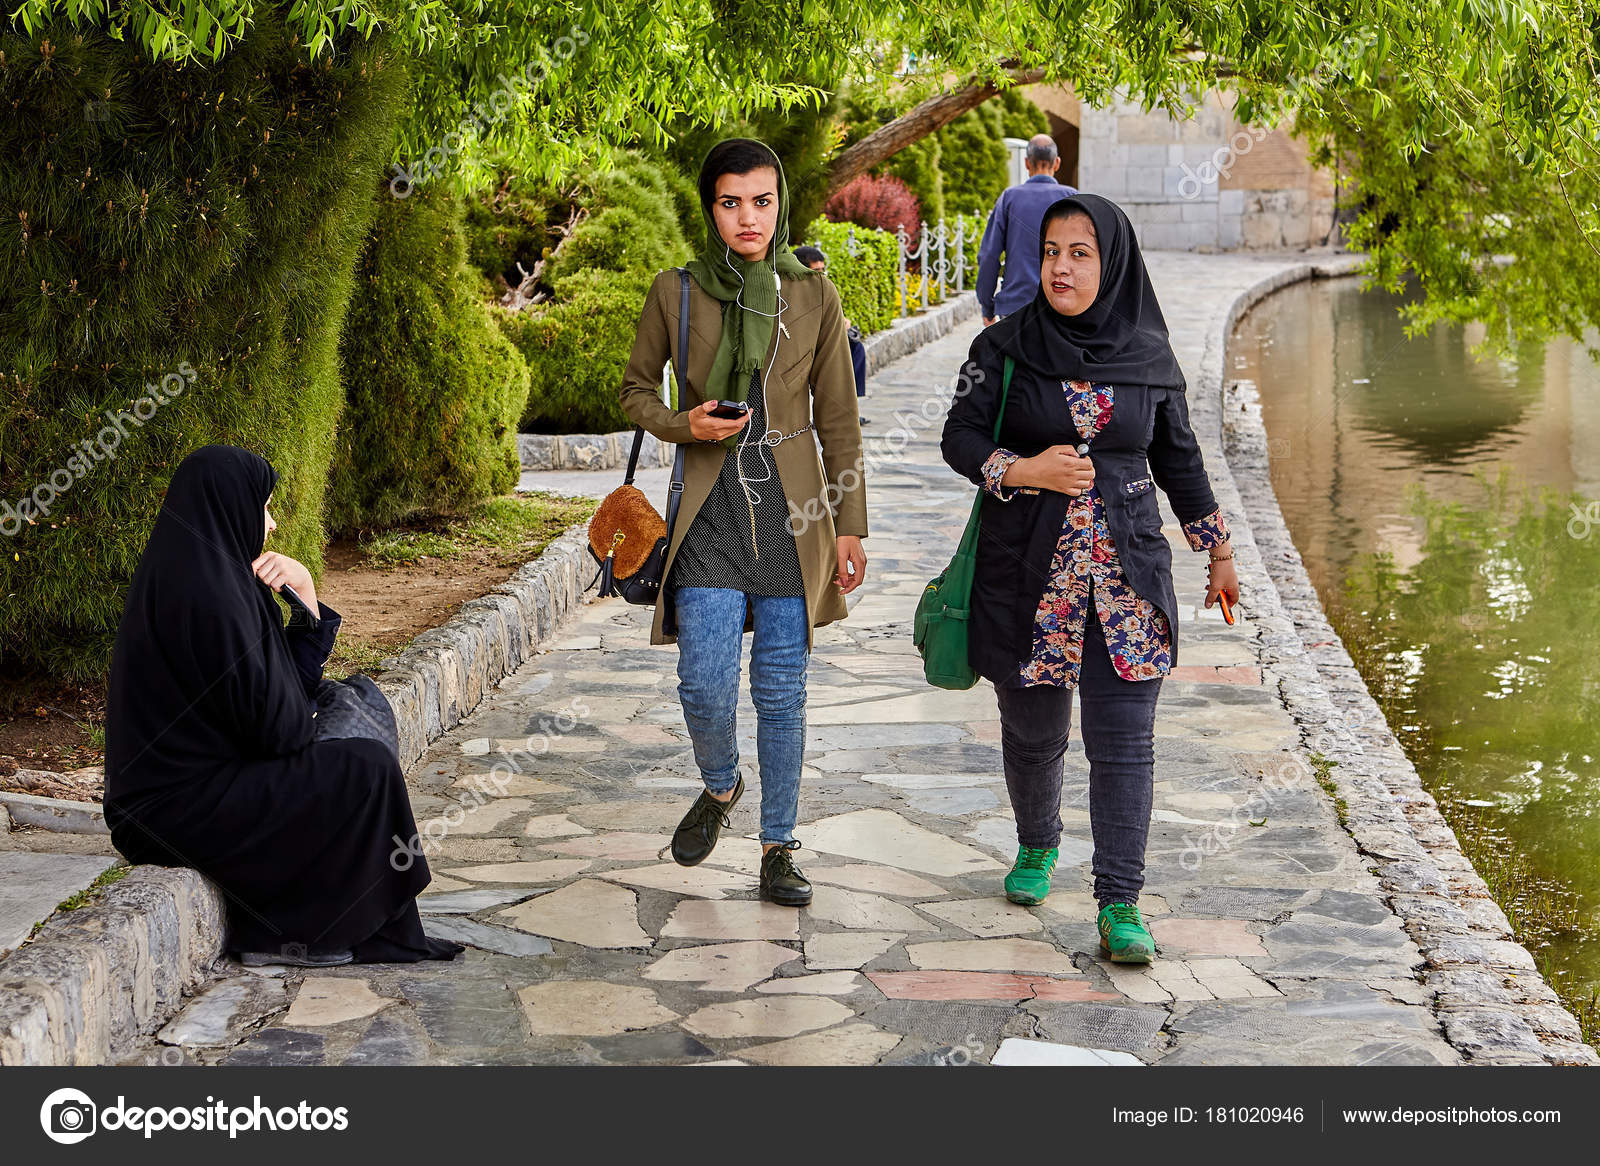 depositphotos_181020946-stock-photo-young-muslim-women-in-hijabs.jpg